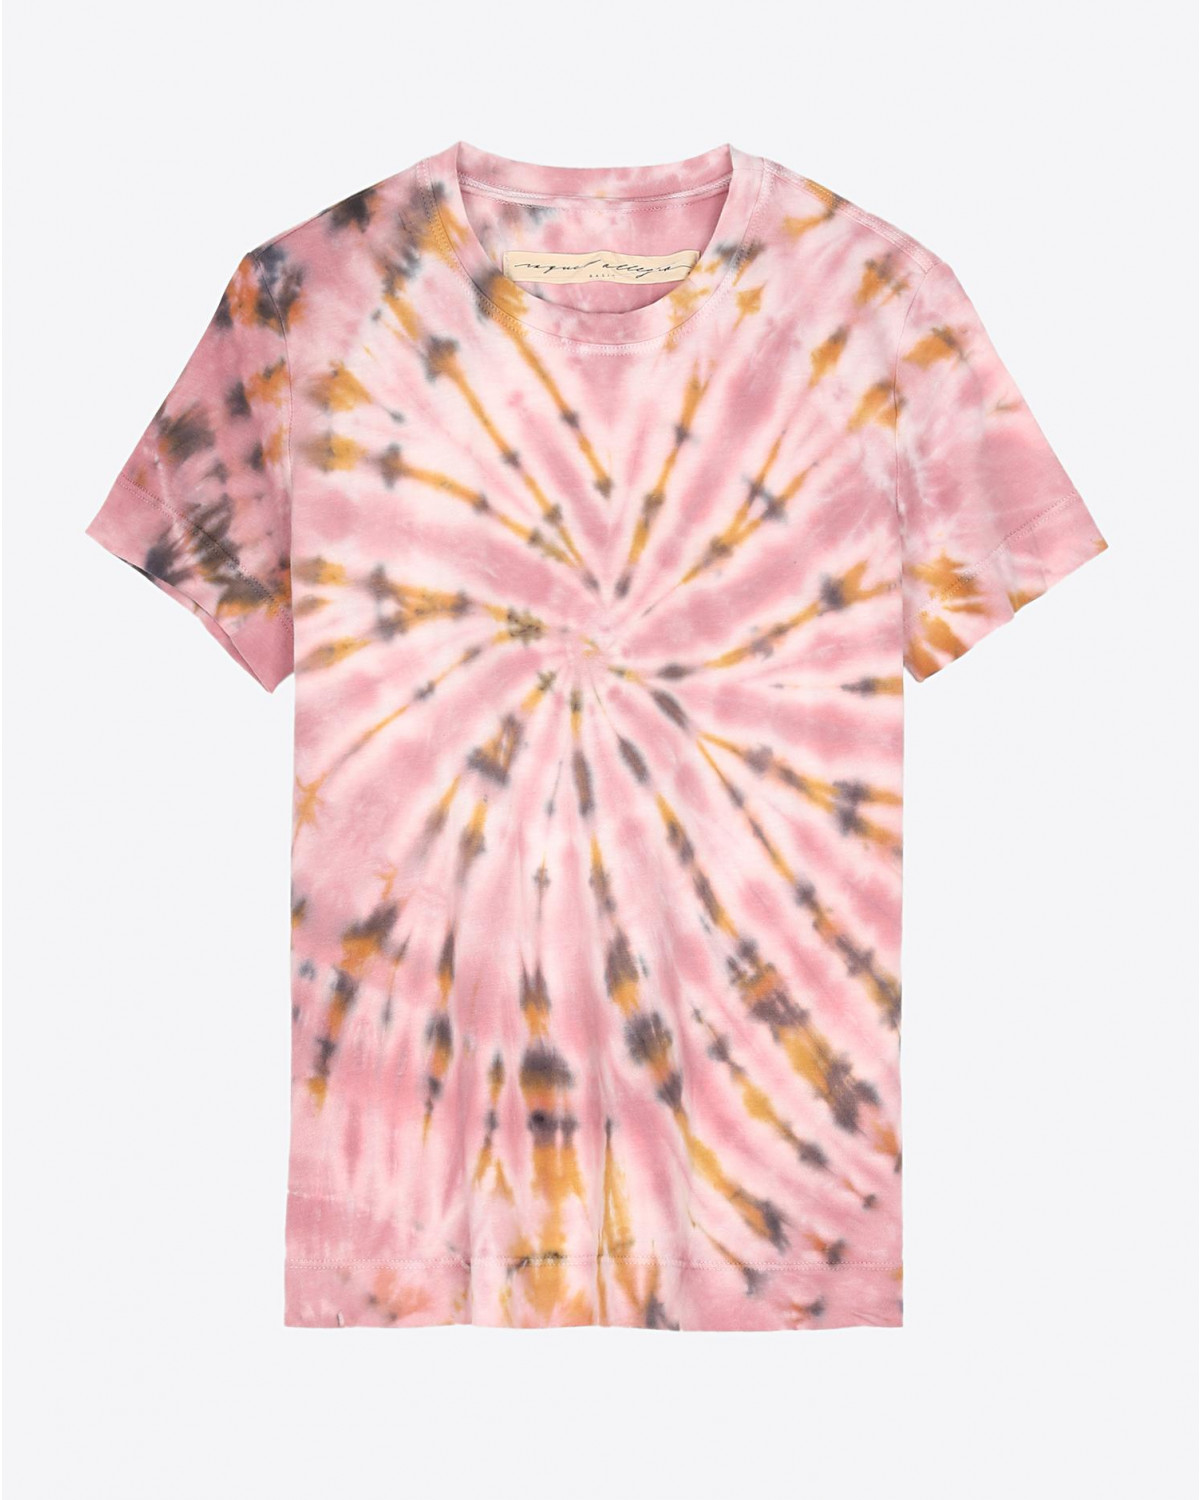 Tee Shirt Raquel Allegra Pré-Collection Boy Tee - Pink Eclipse
